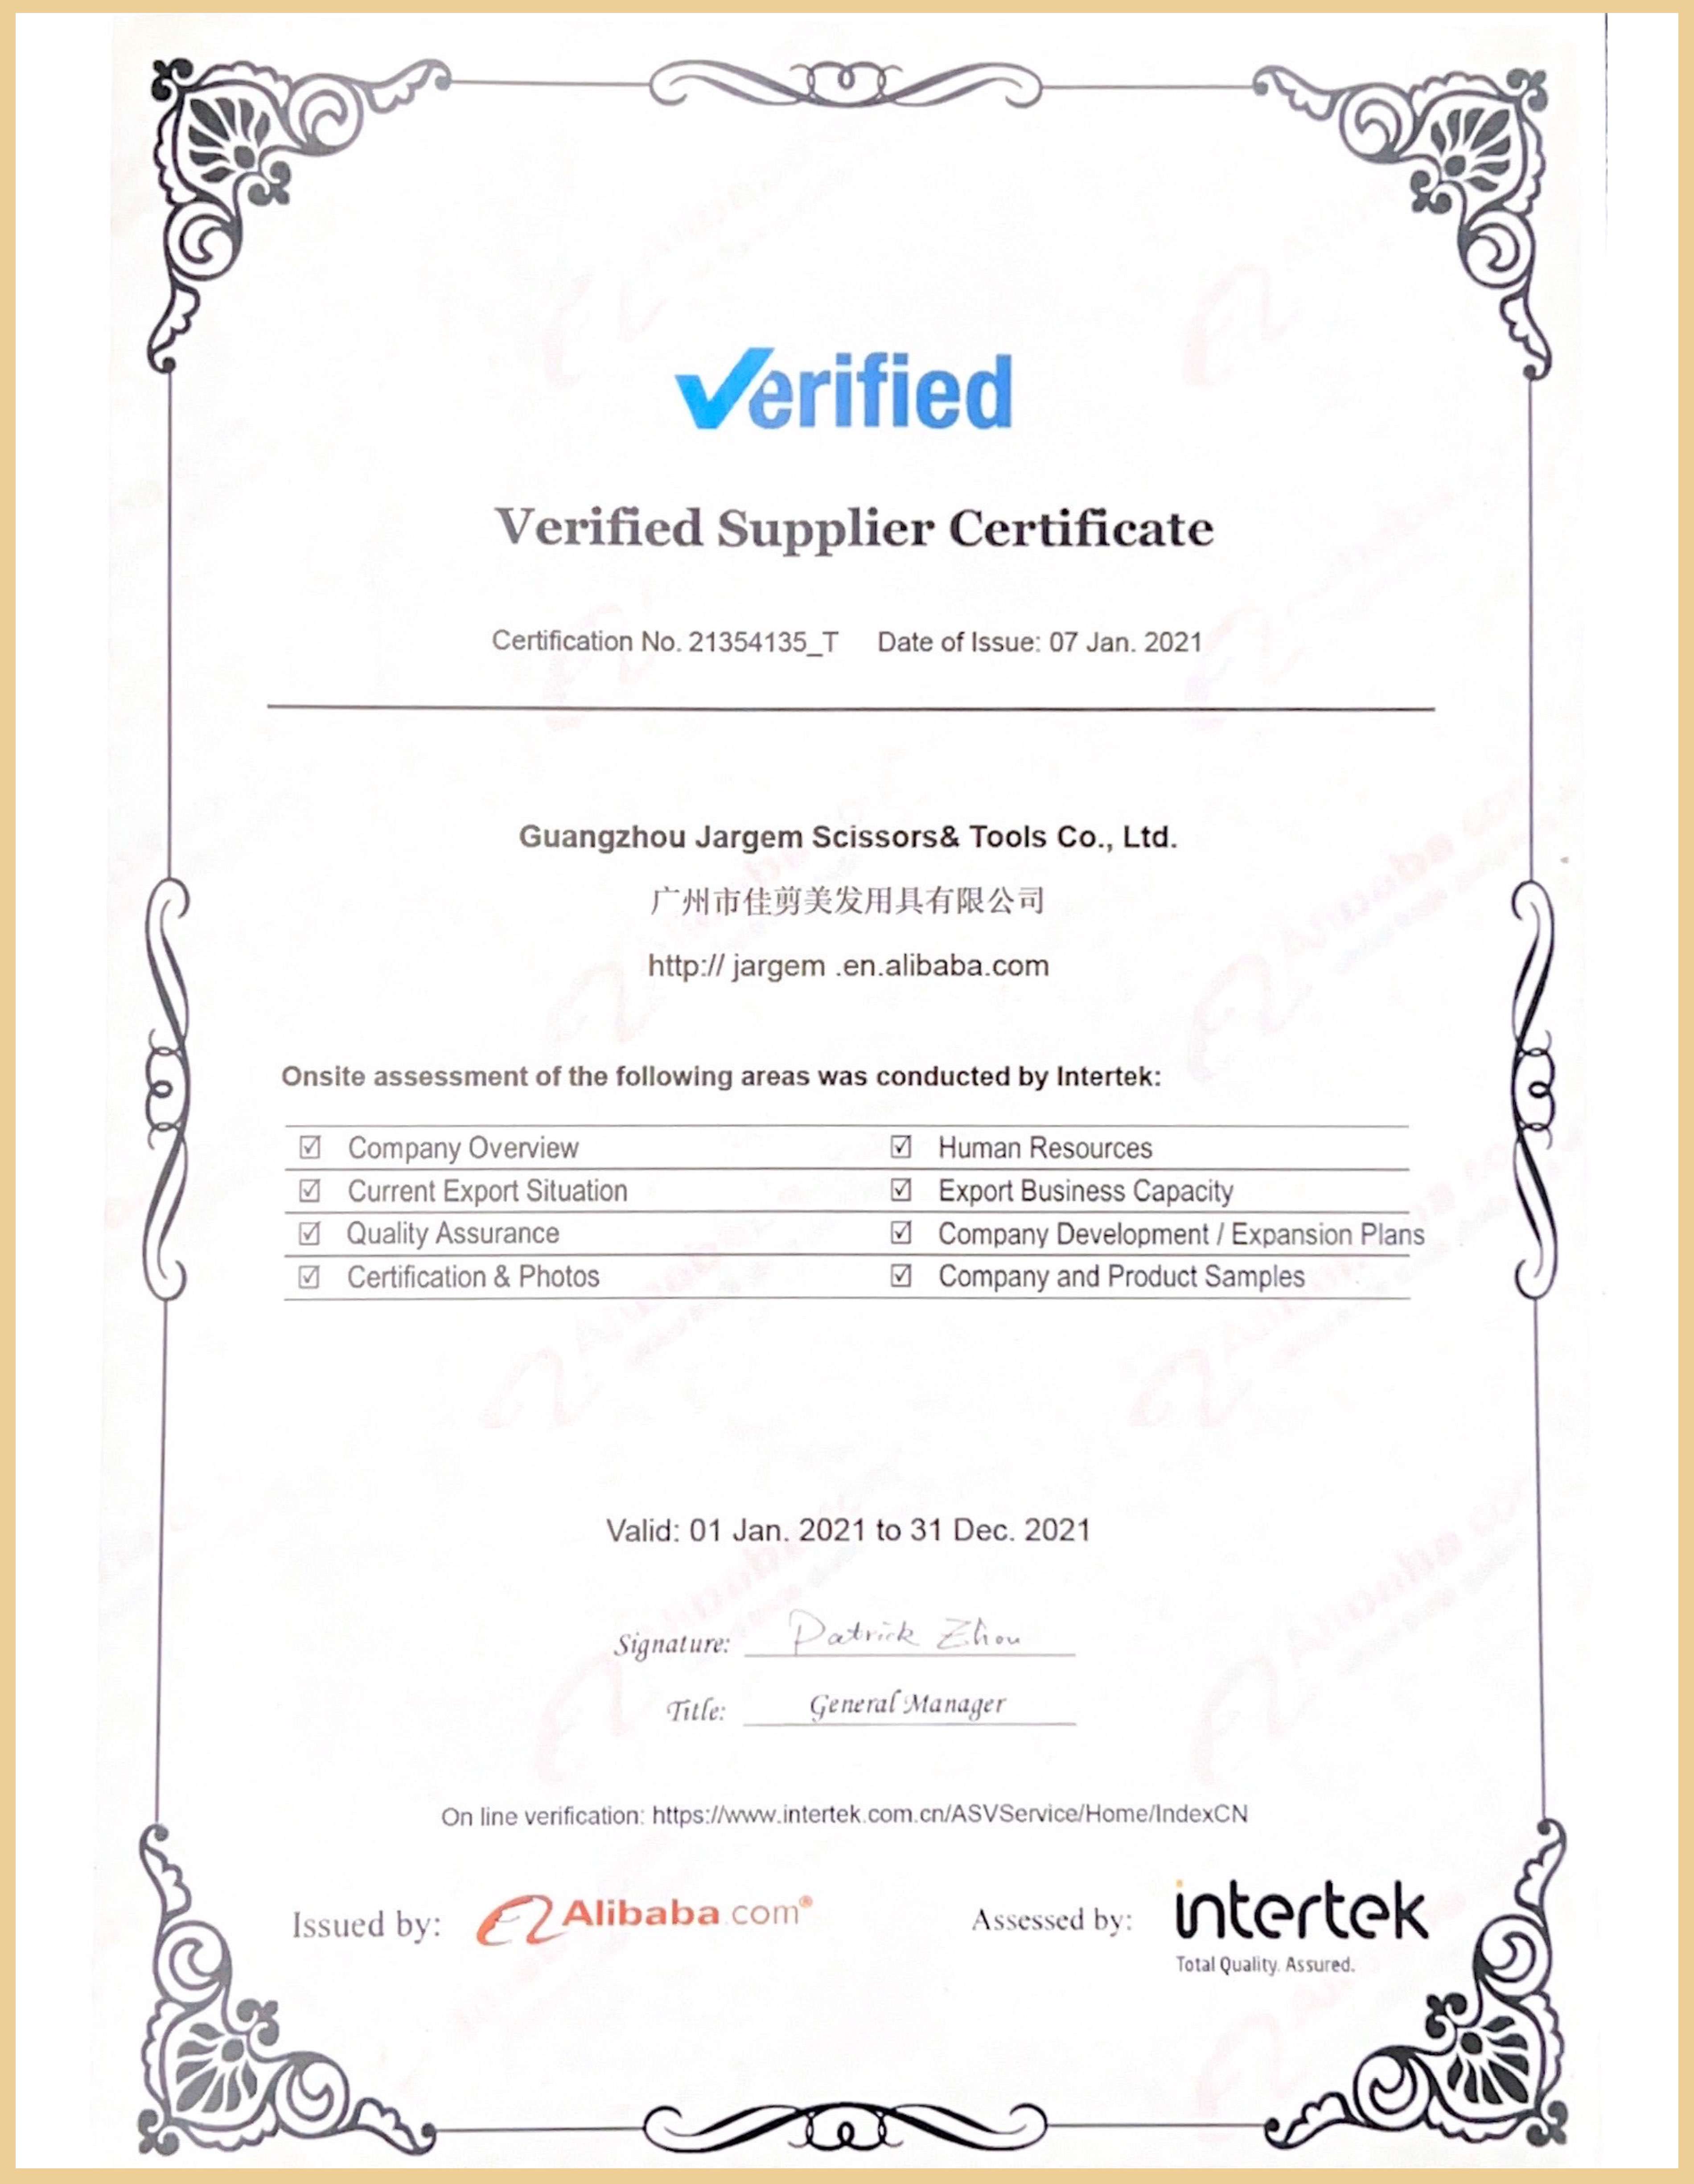 Certificate of Verified Manufacturer 2021